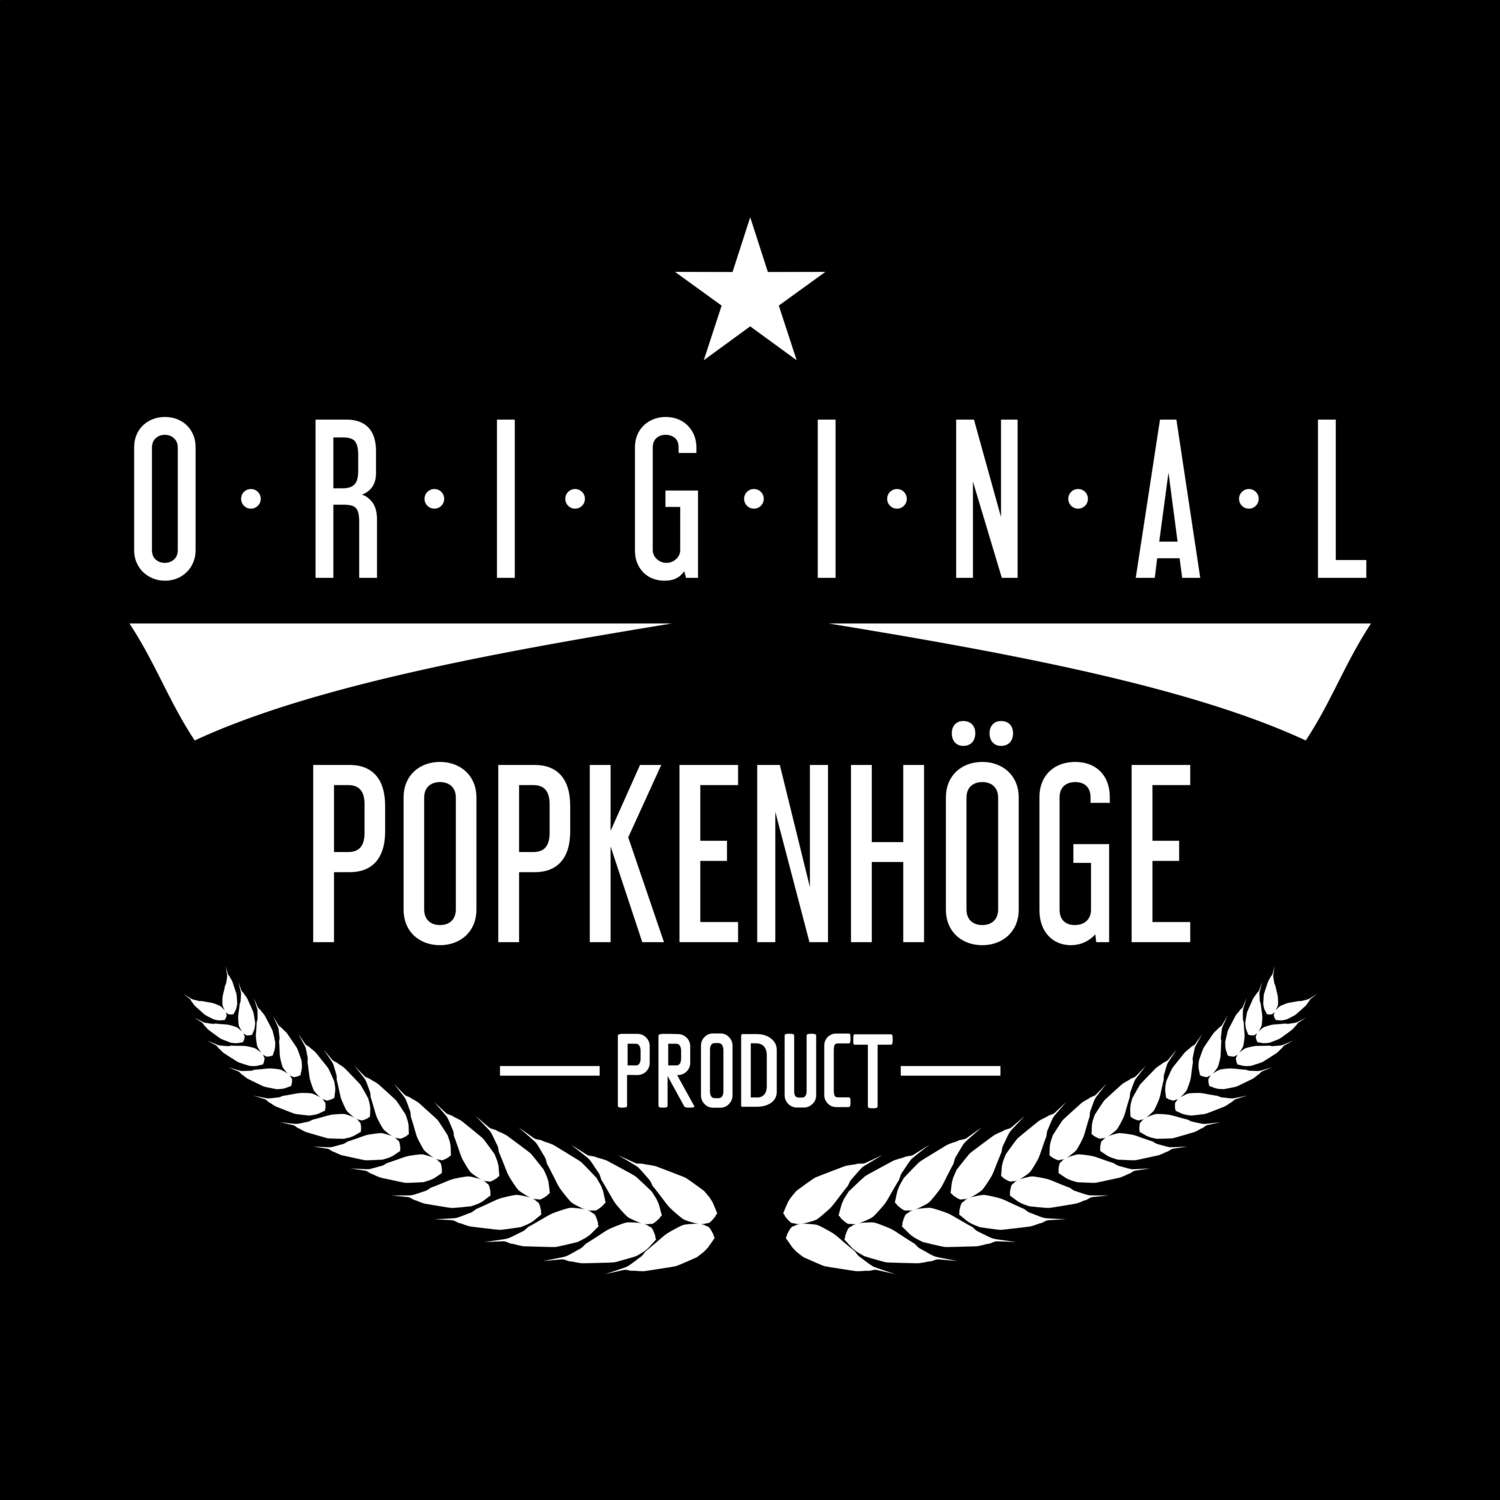 Popkenhöge T-Shirt »Original Product«